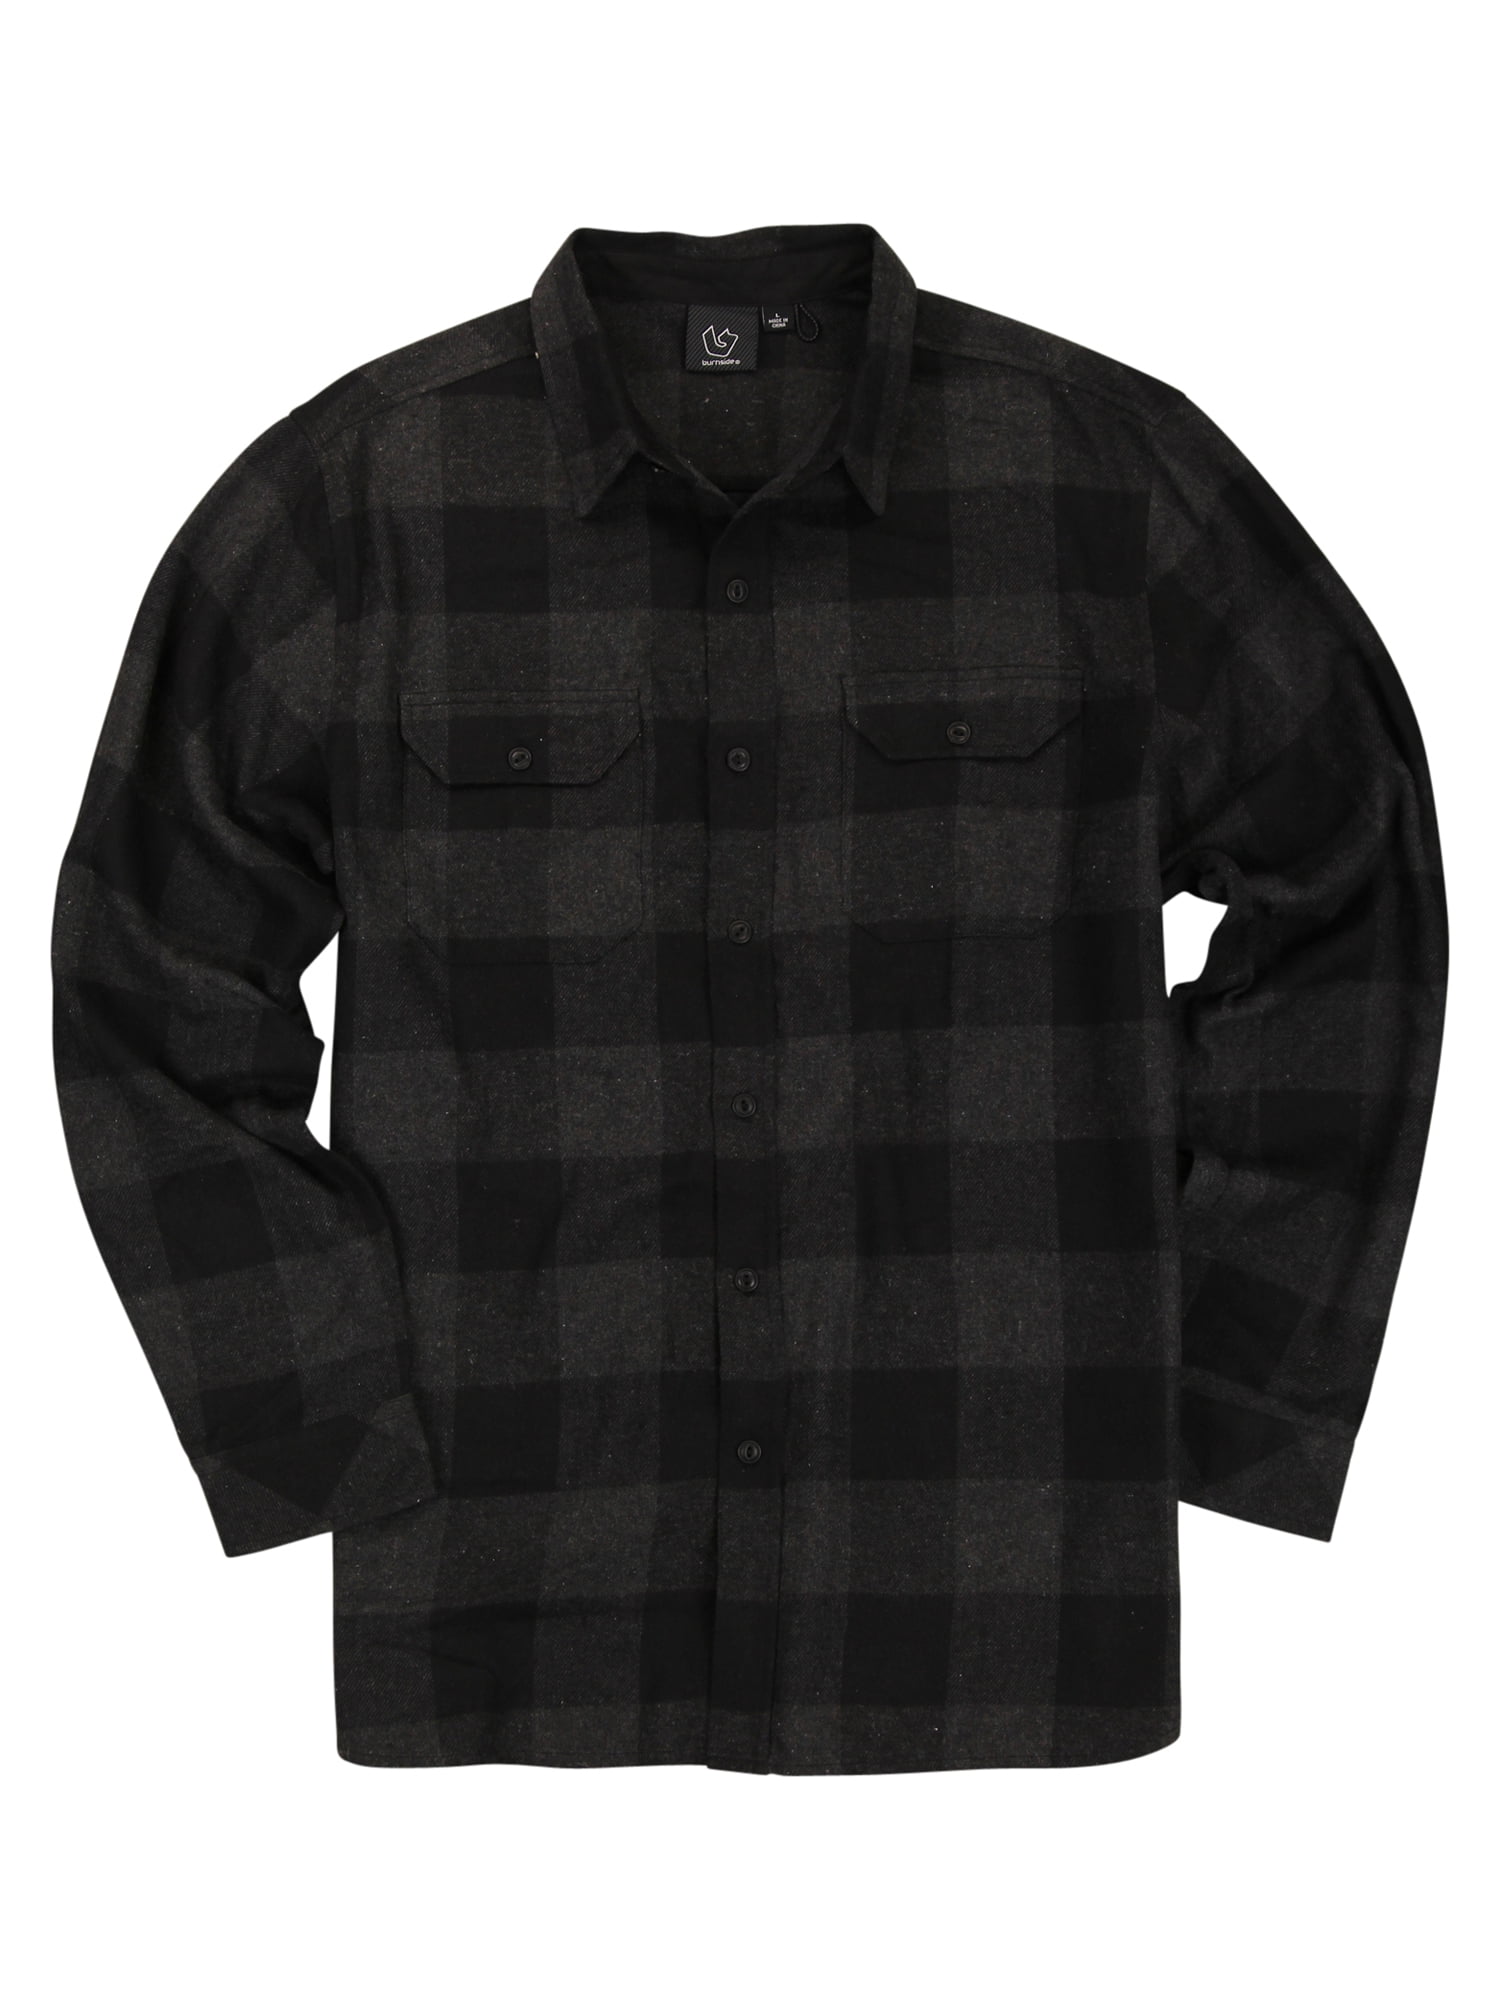 (Black, Long Men\'s Down Shirt Large) Flannel Button Sleeve (BW8281)